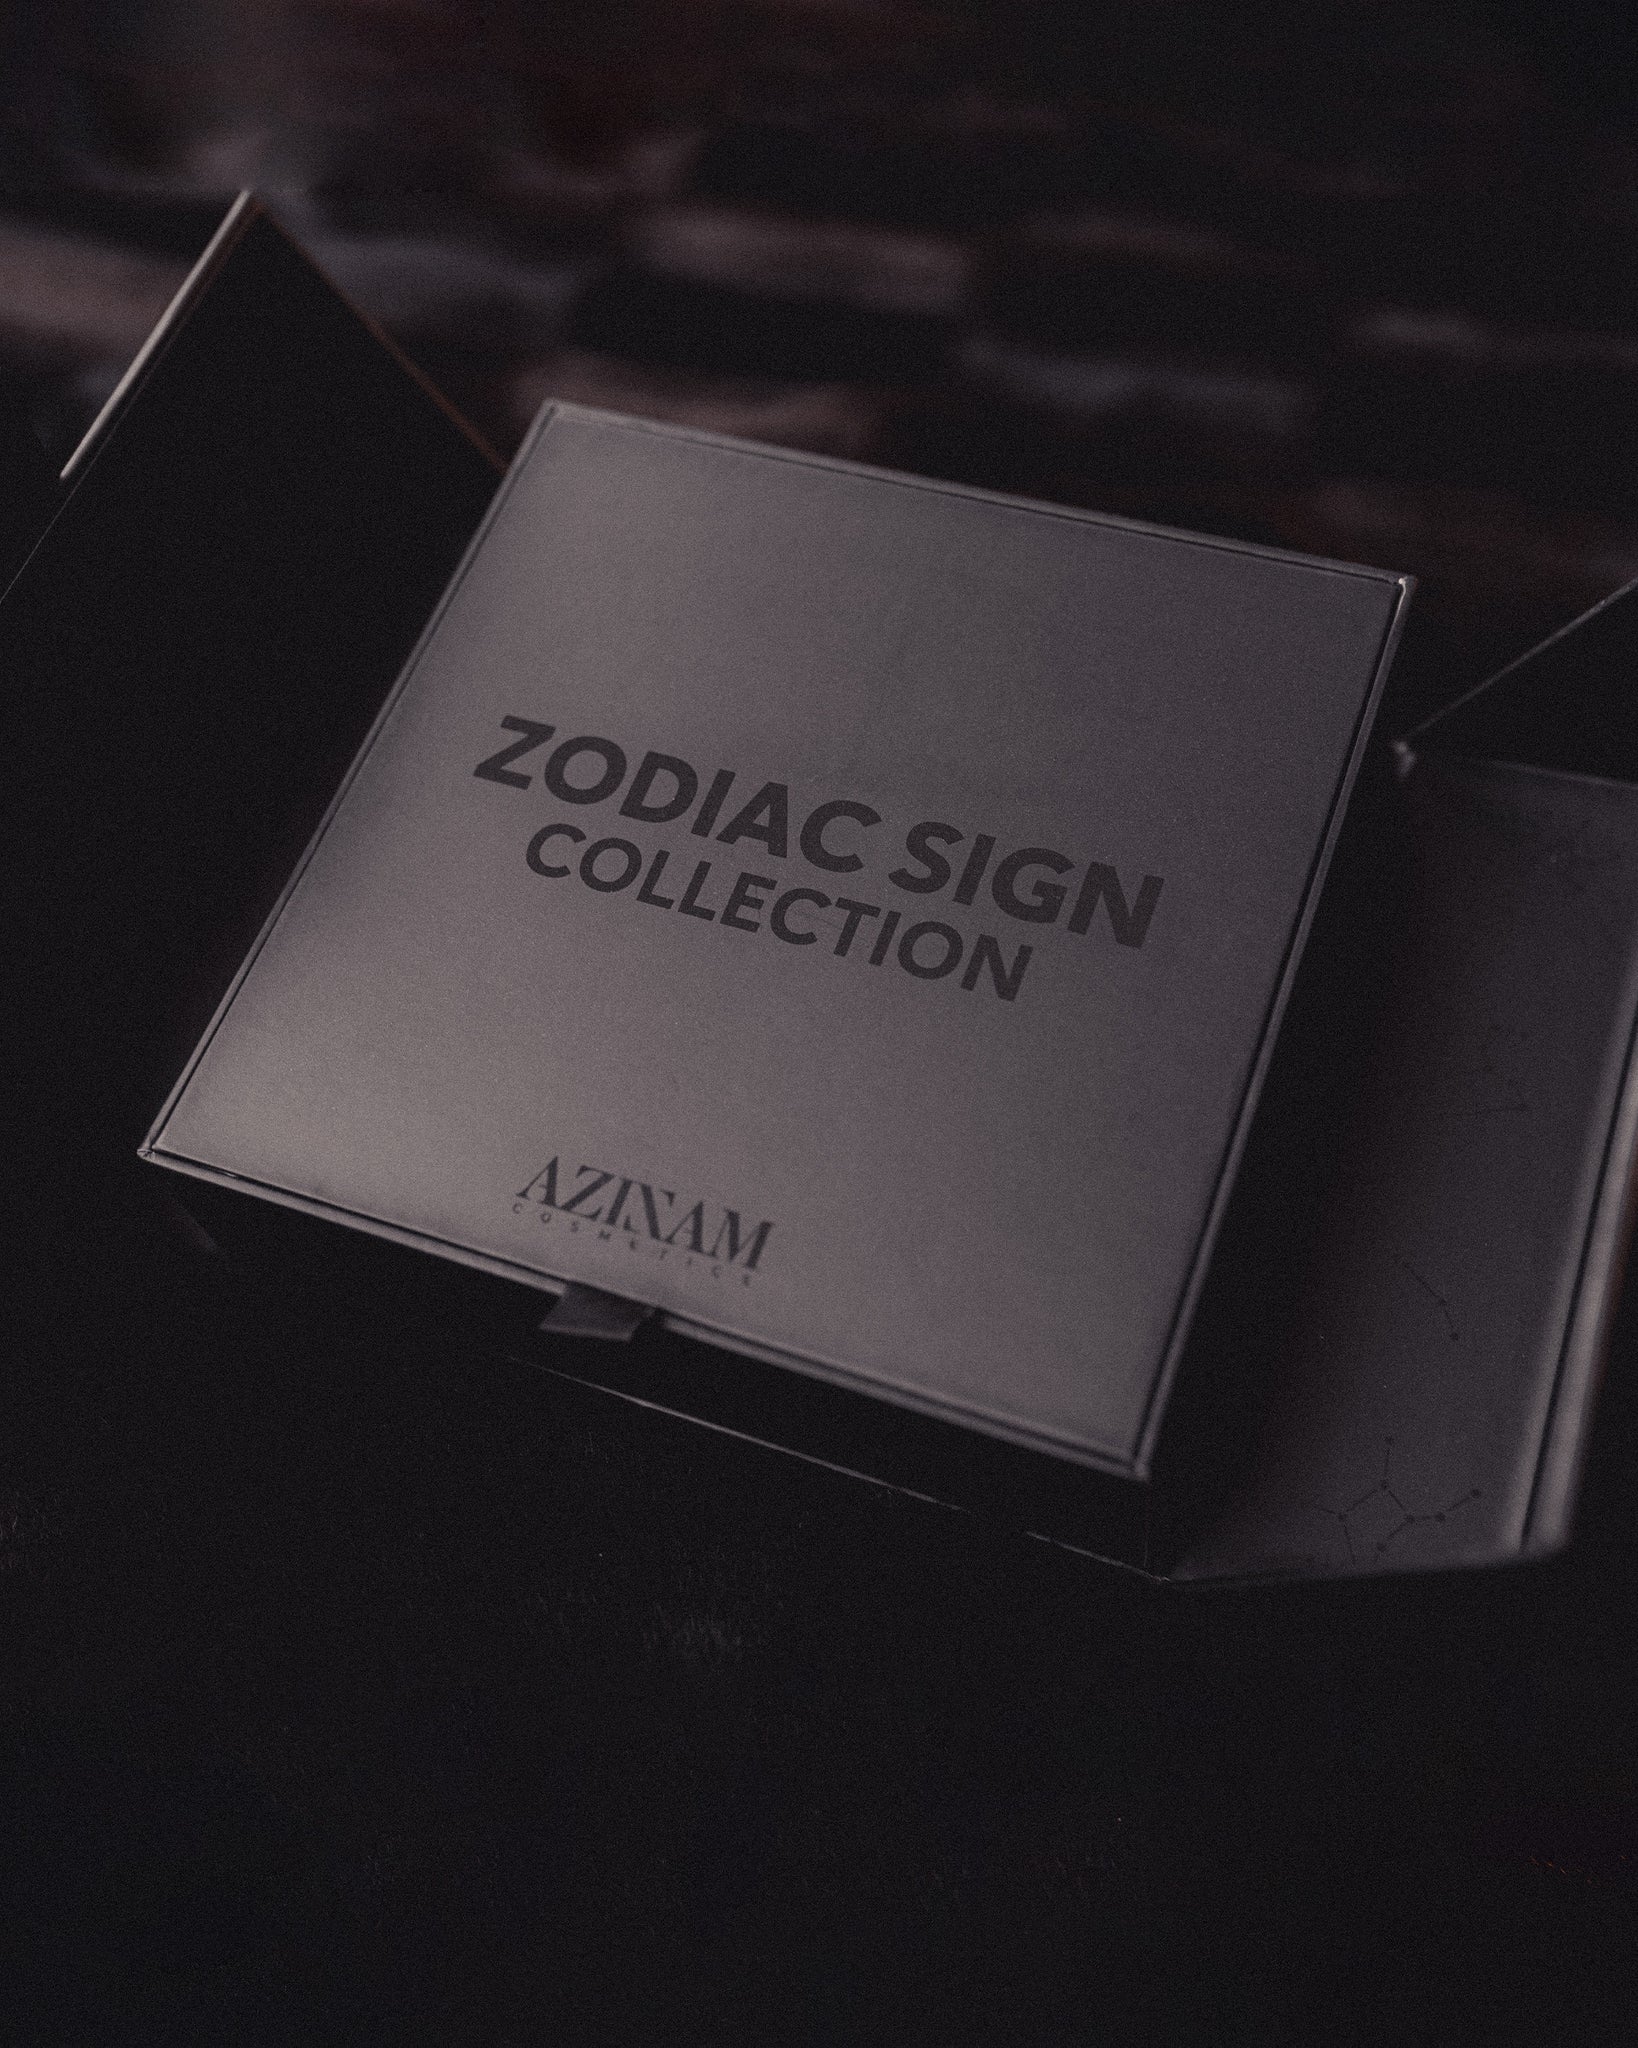 Zodiac Sign PR BOX